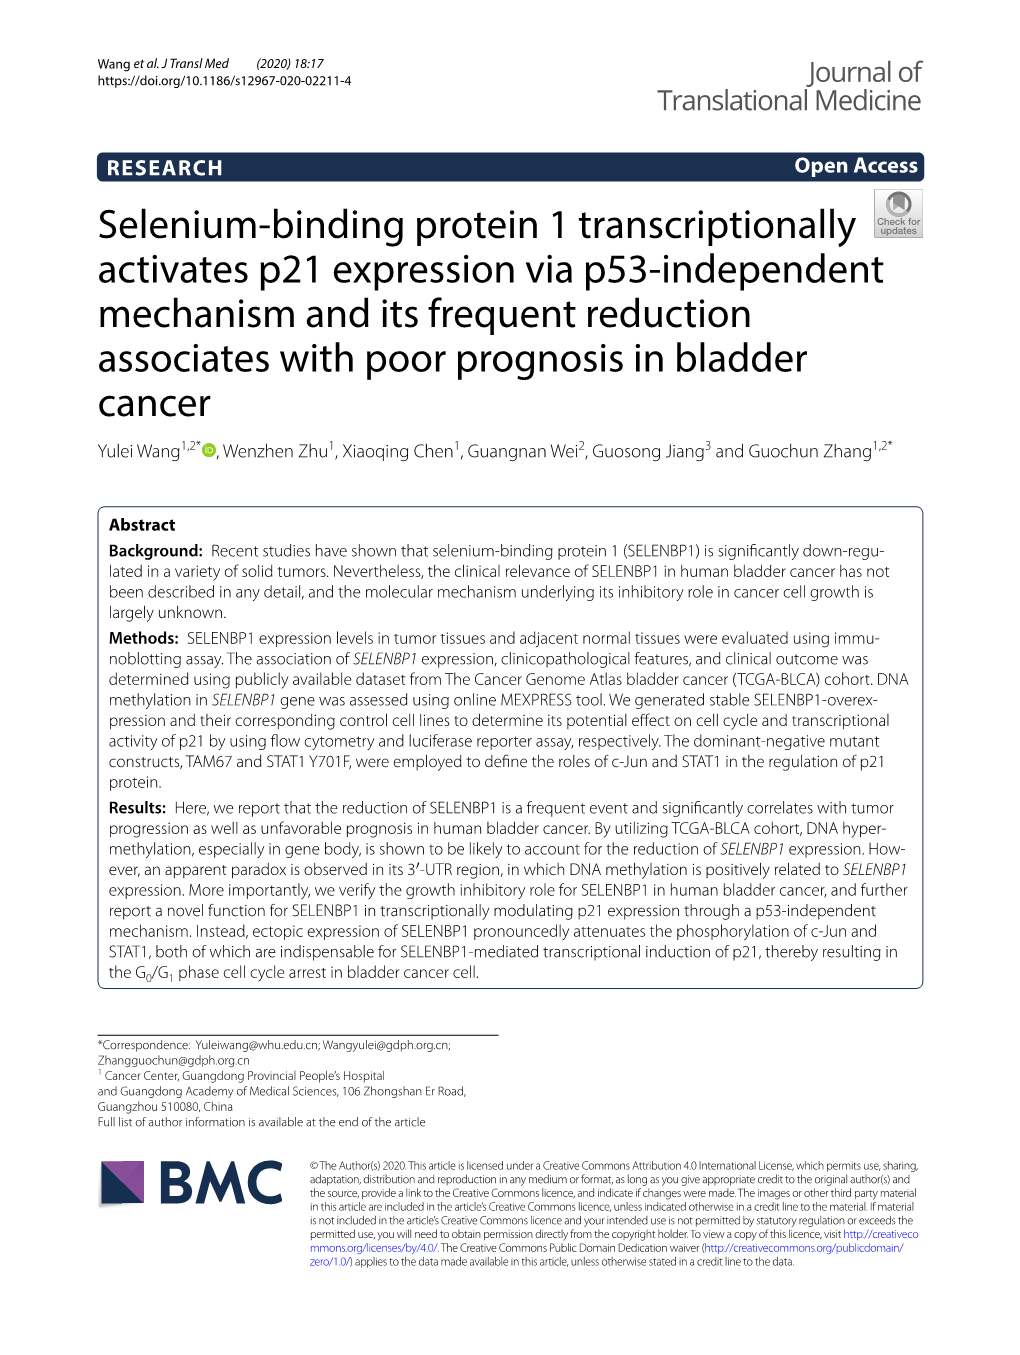 Selenium-Binding Protein 1 Transcriptionally Activates P21